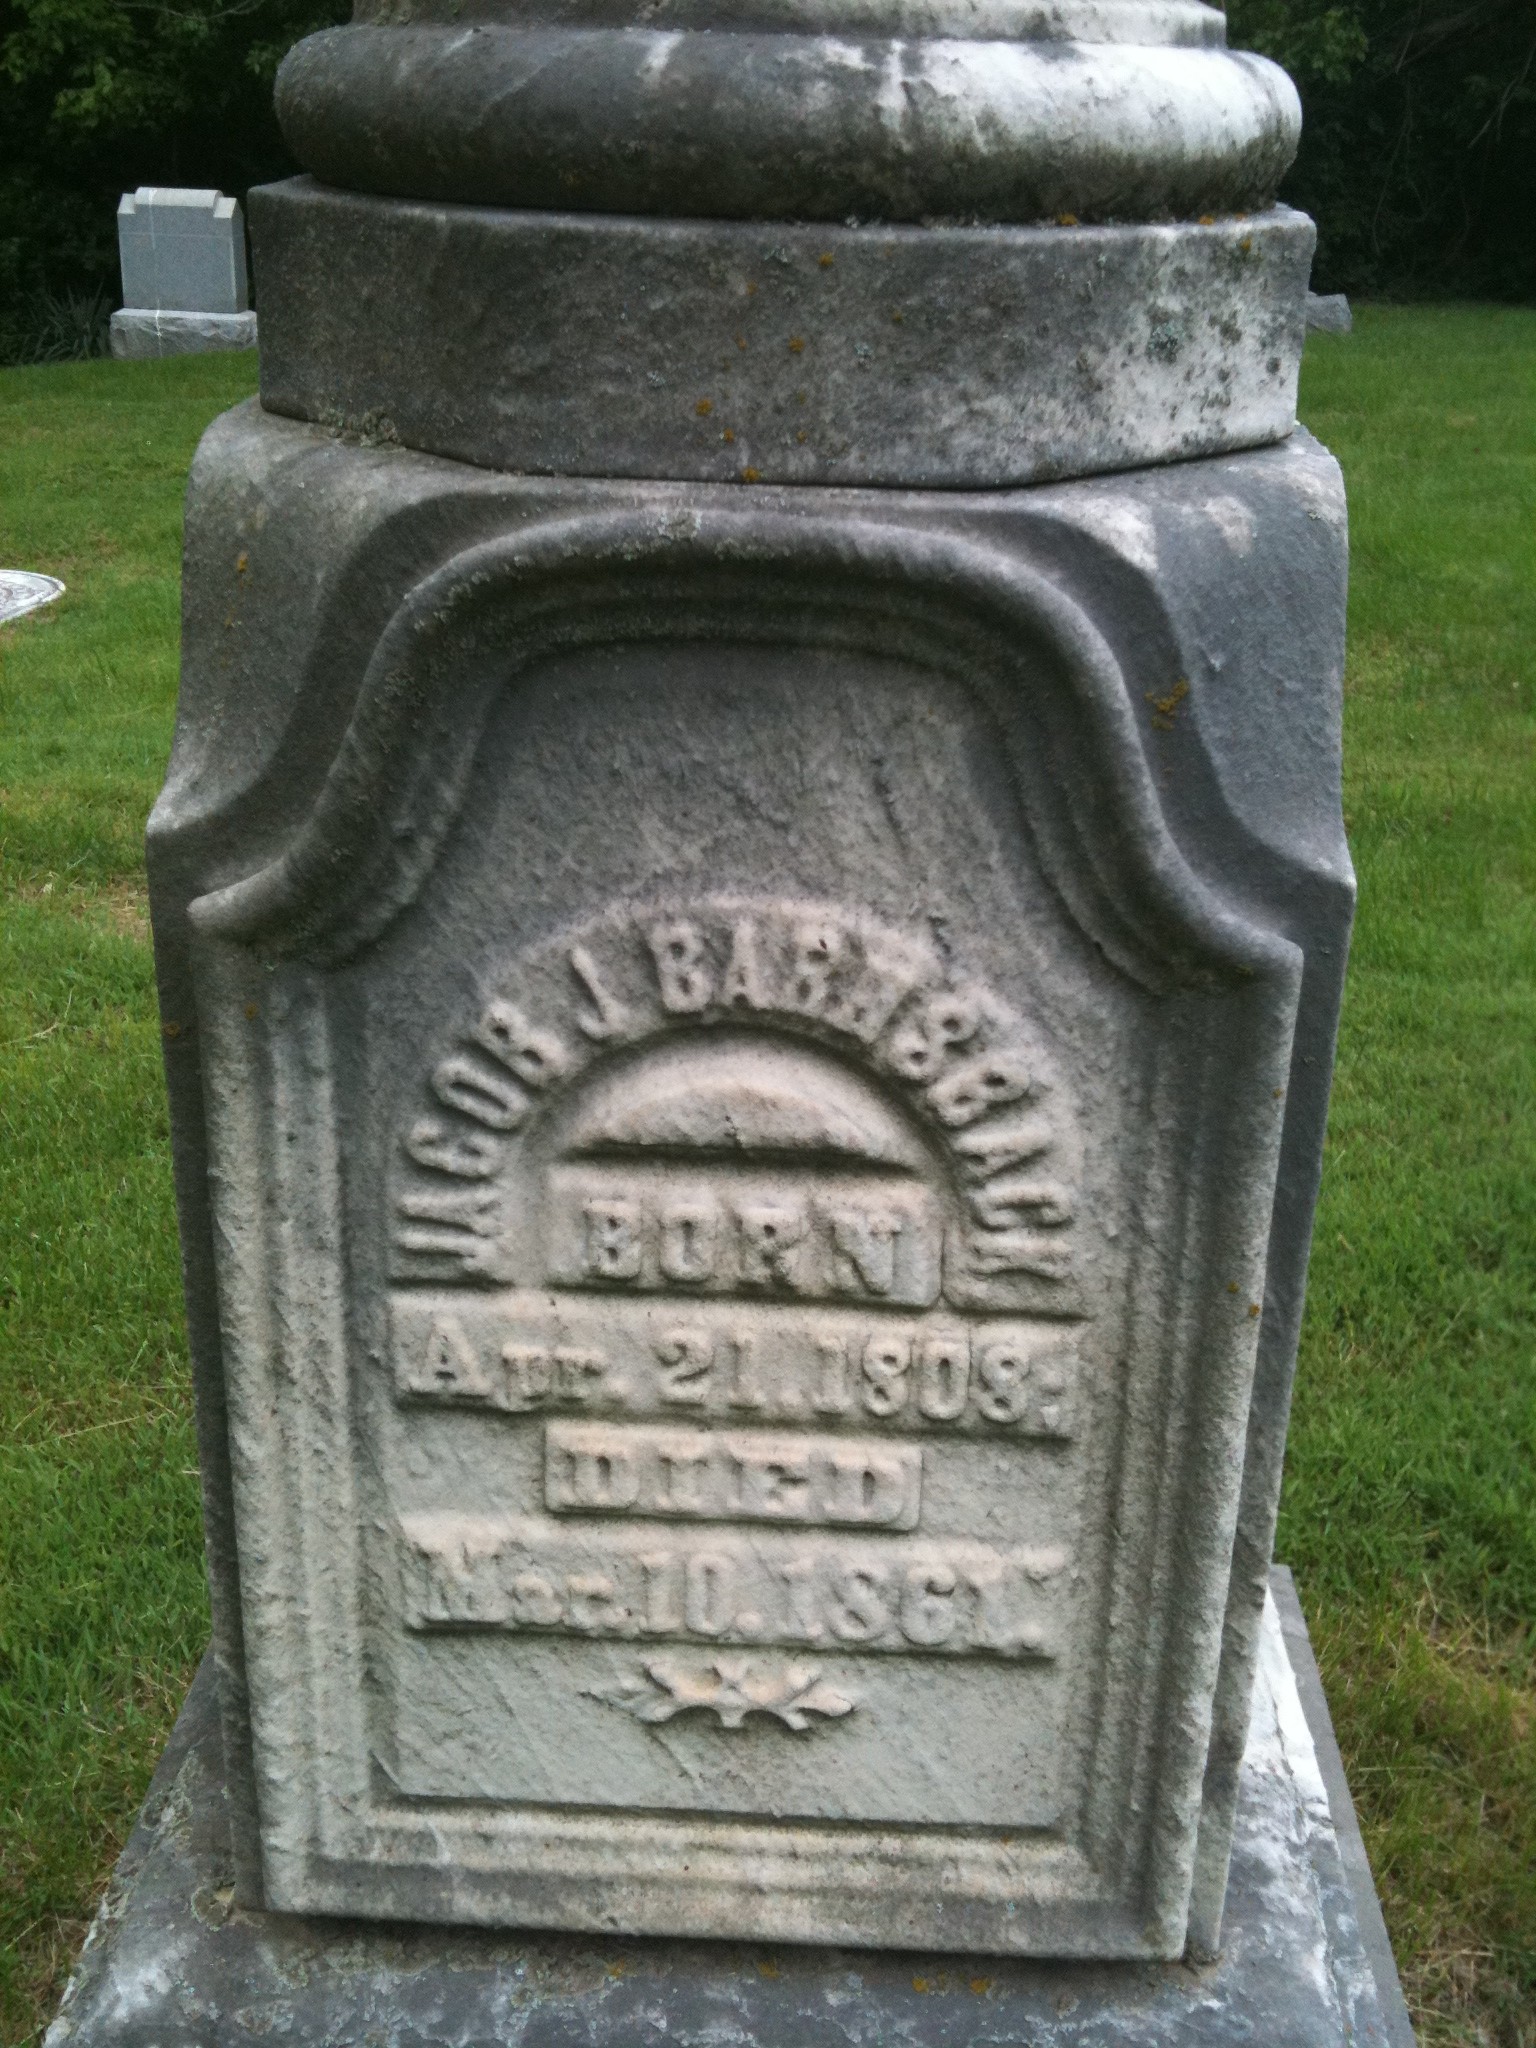 Close up photo of Jacob J. Barnsback Headstone